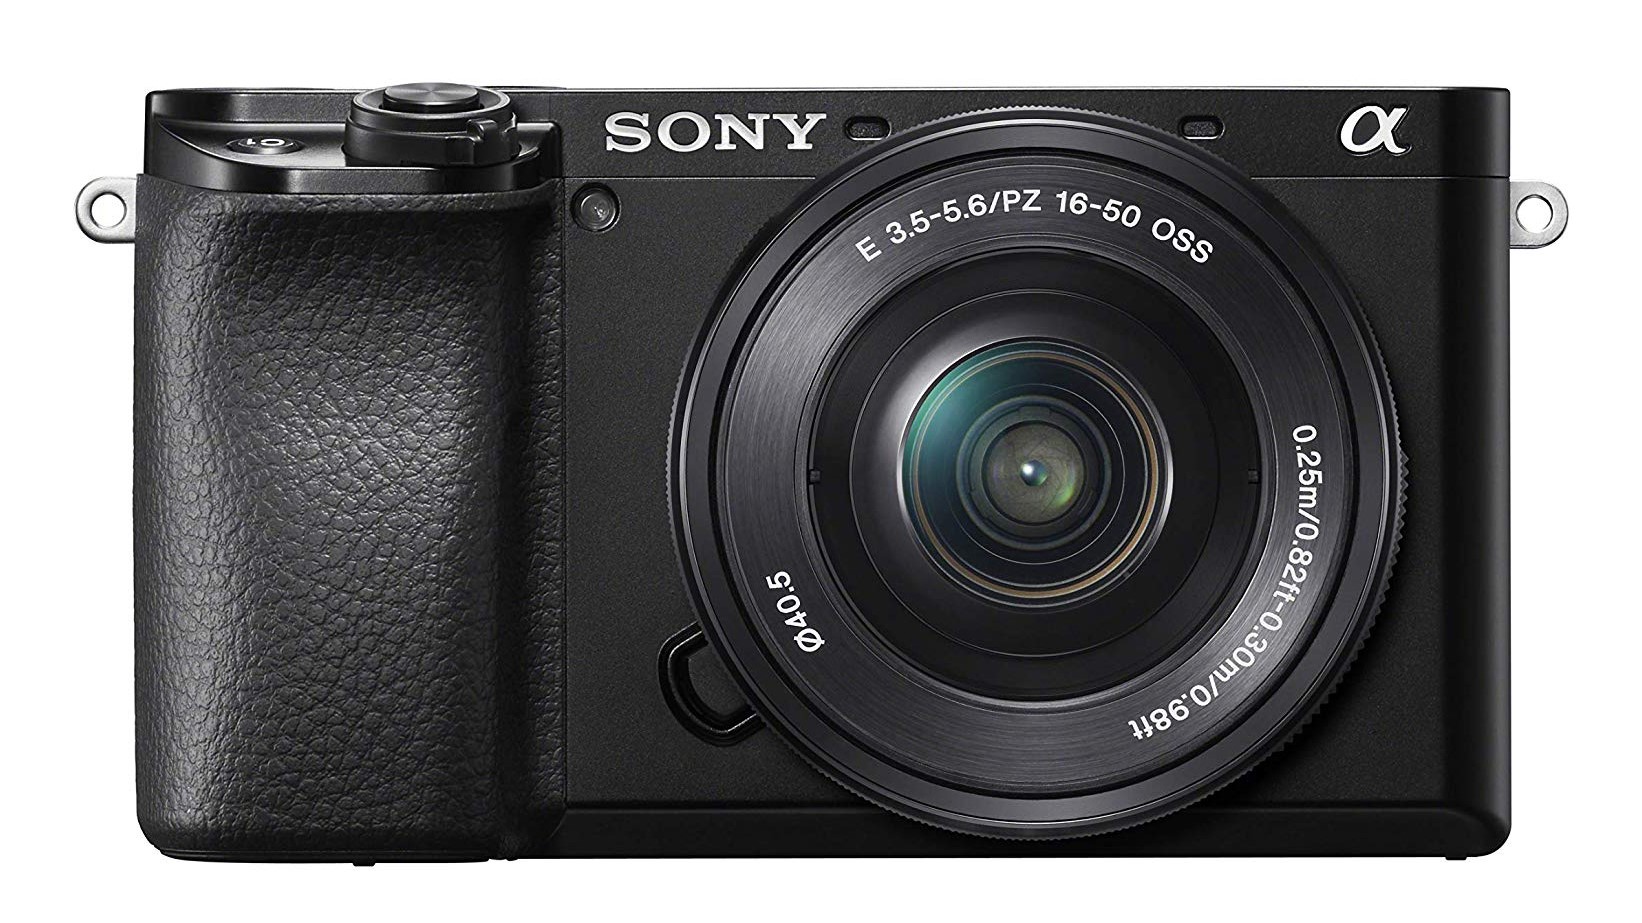 Sony Alpha A6100 camera front